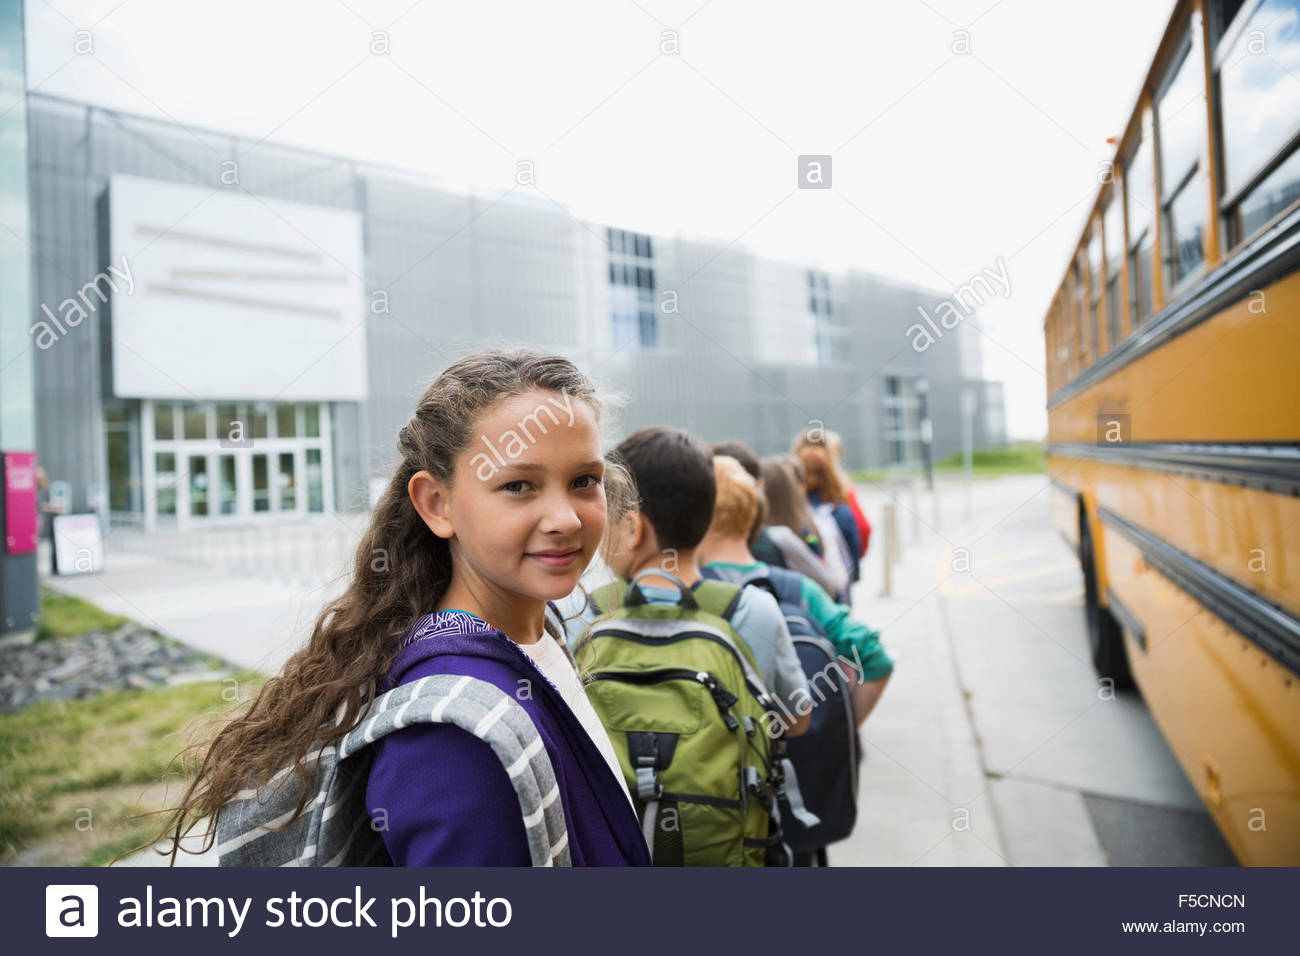 Portrait smiling schoolgirl arriving science center with classmates Stock Photo